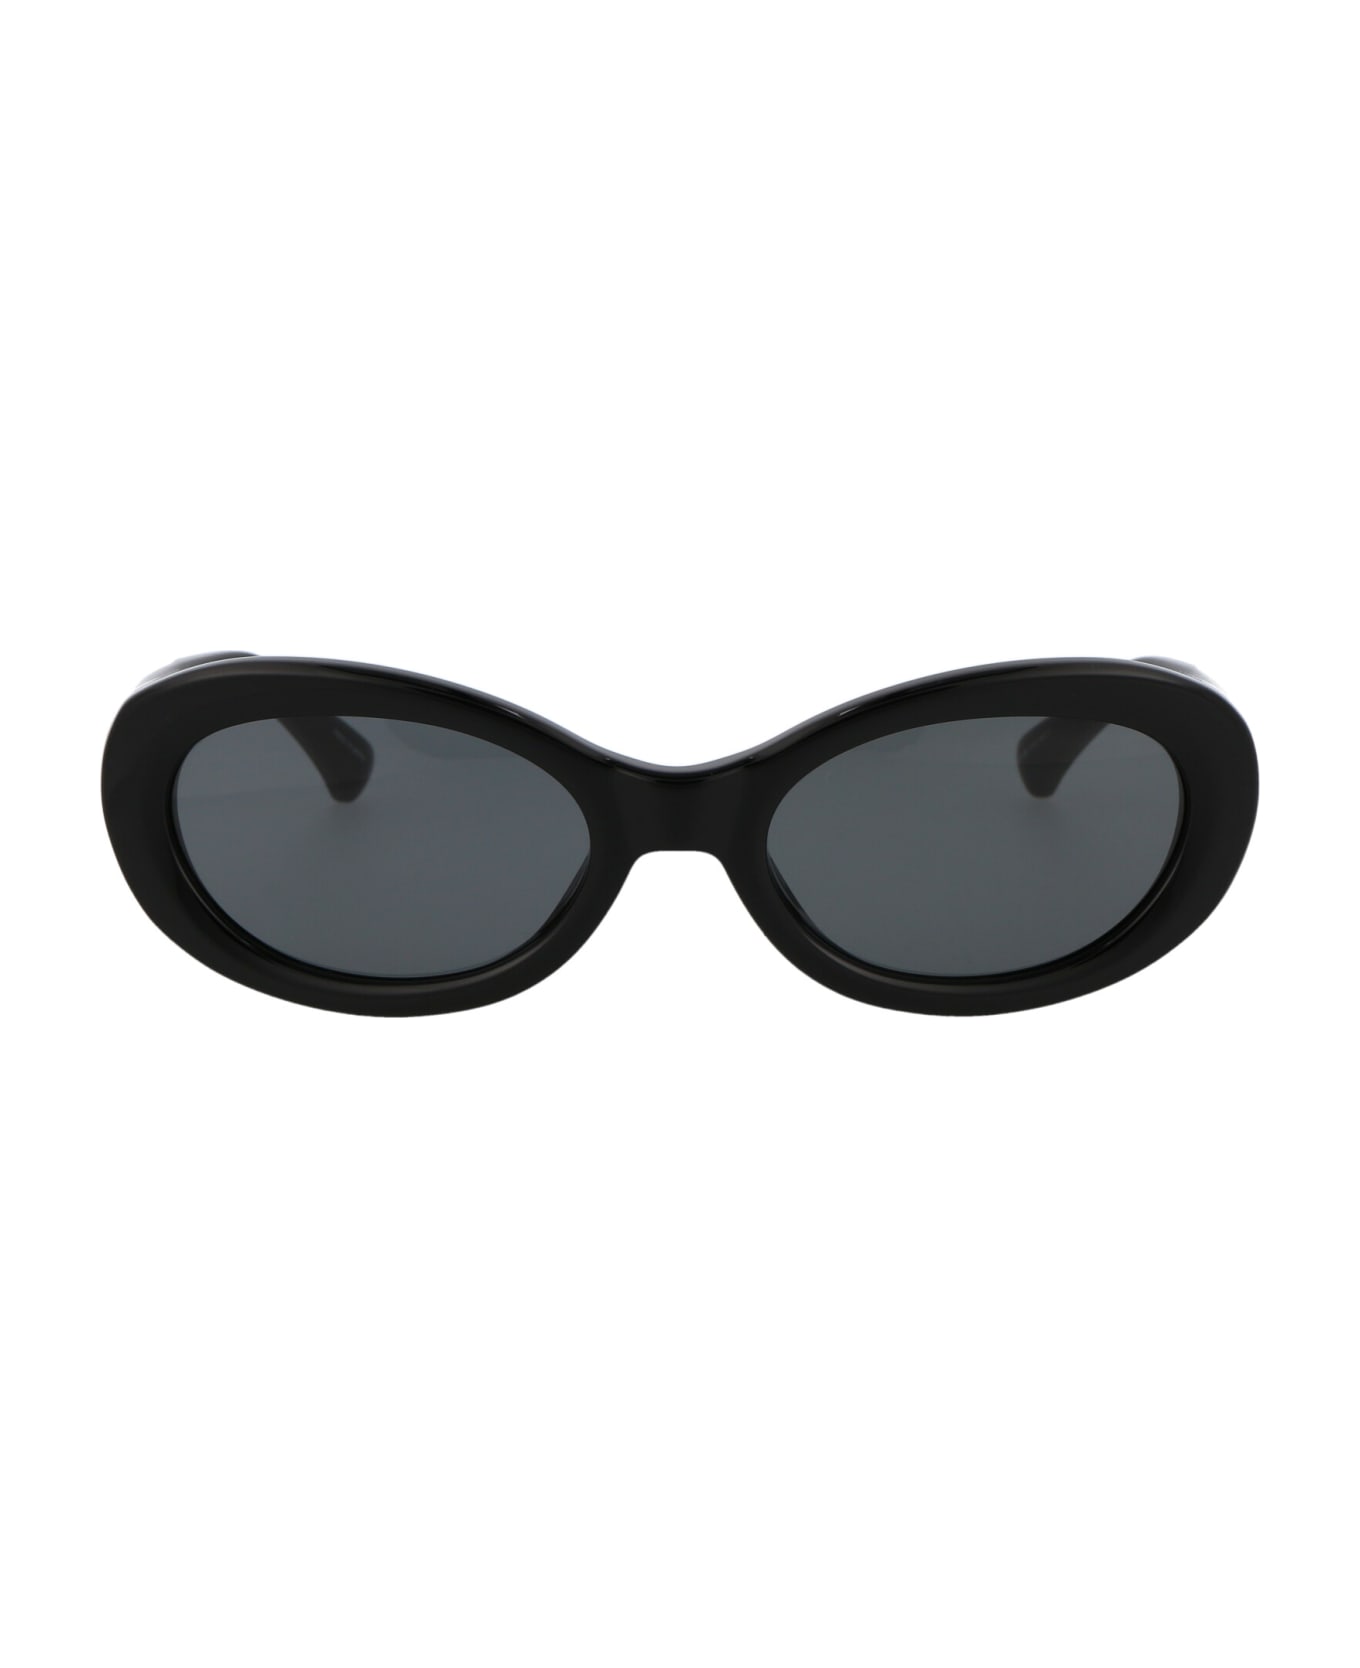 Dries Van Noten Dvn211c1sun Sunglasses - BLACK/SILVER/GREY